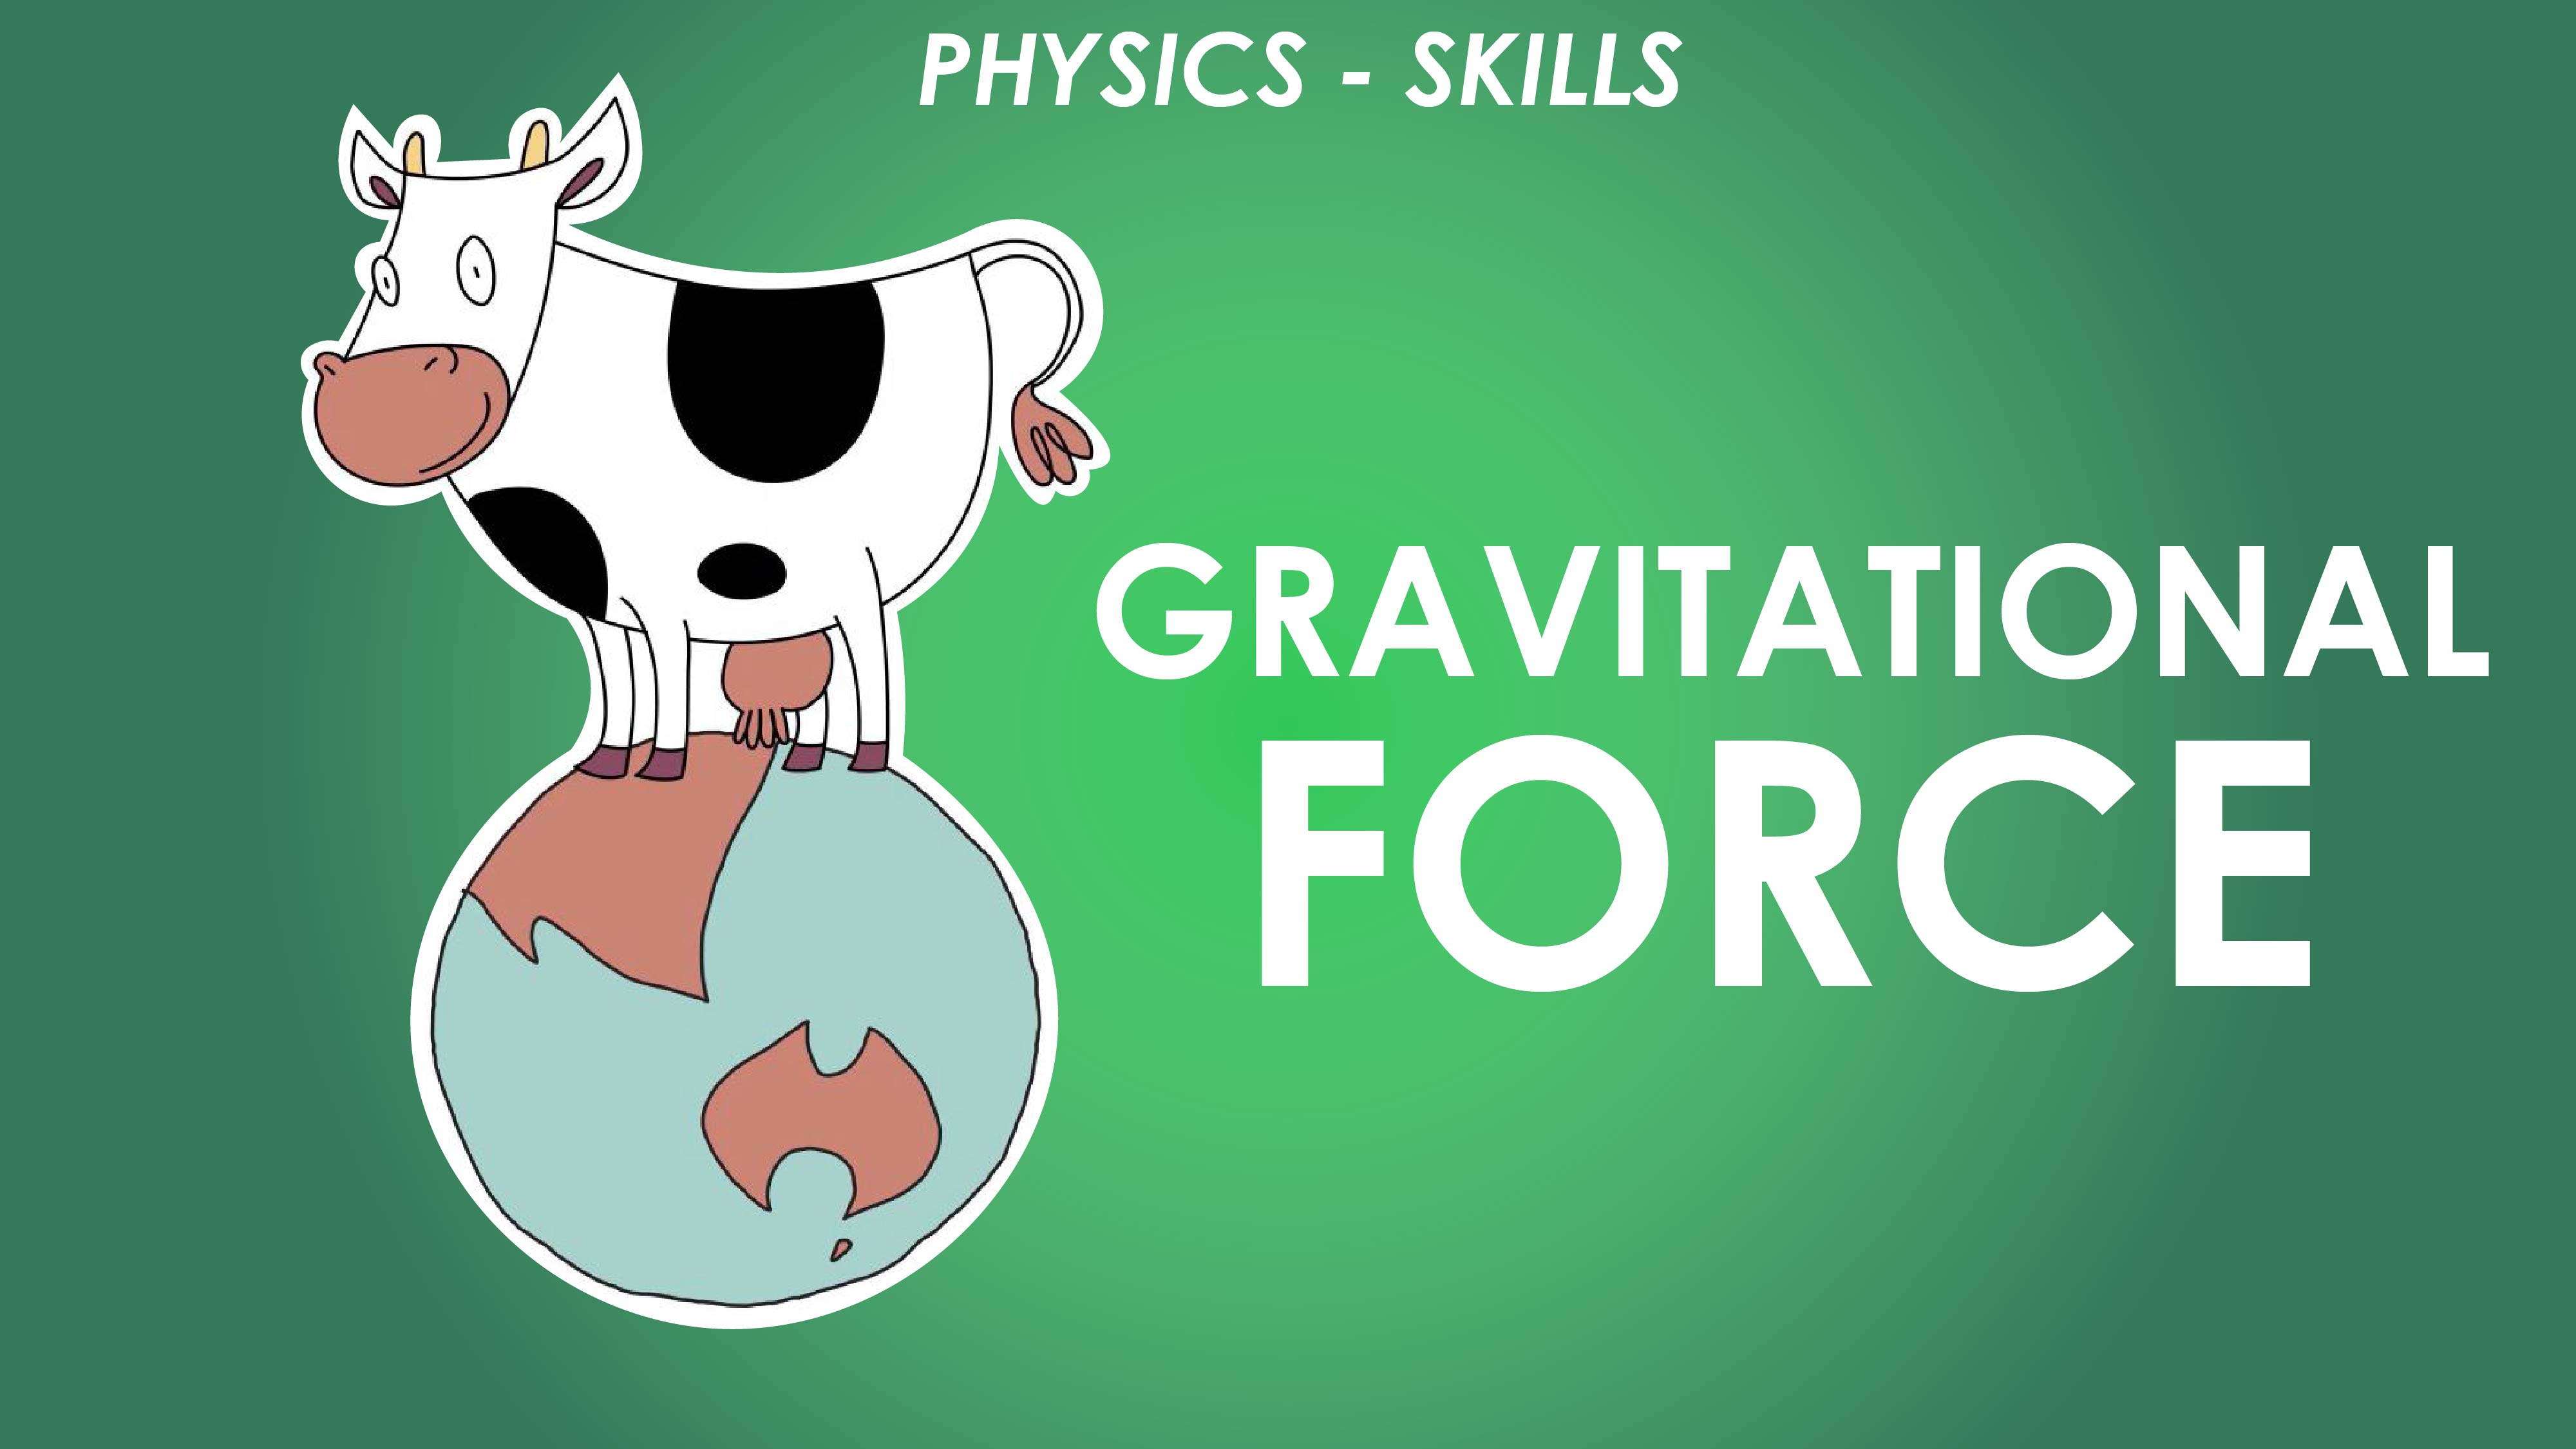 Gravitational Force - Motion in Gravitational Fields